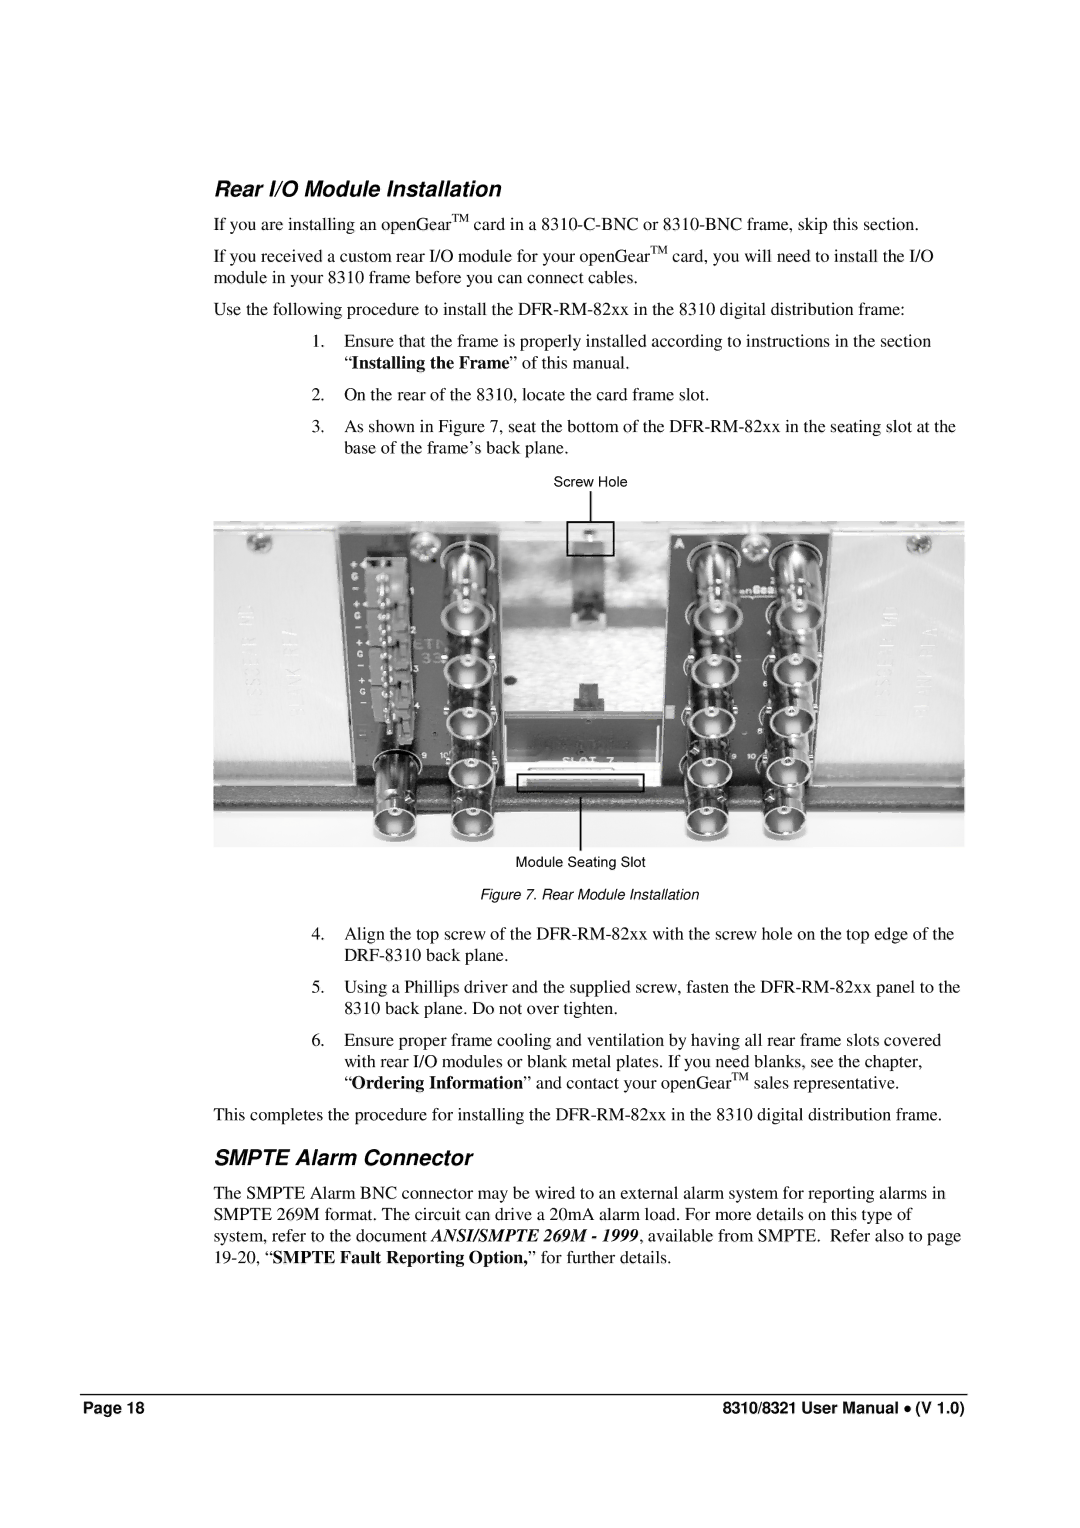 Cobalt Networks 8310(-C), 8321(-C) user manual Rear I/O Module Installation, Smpte Alarm Connector 